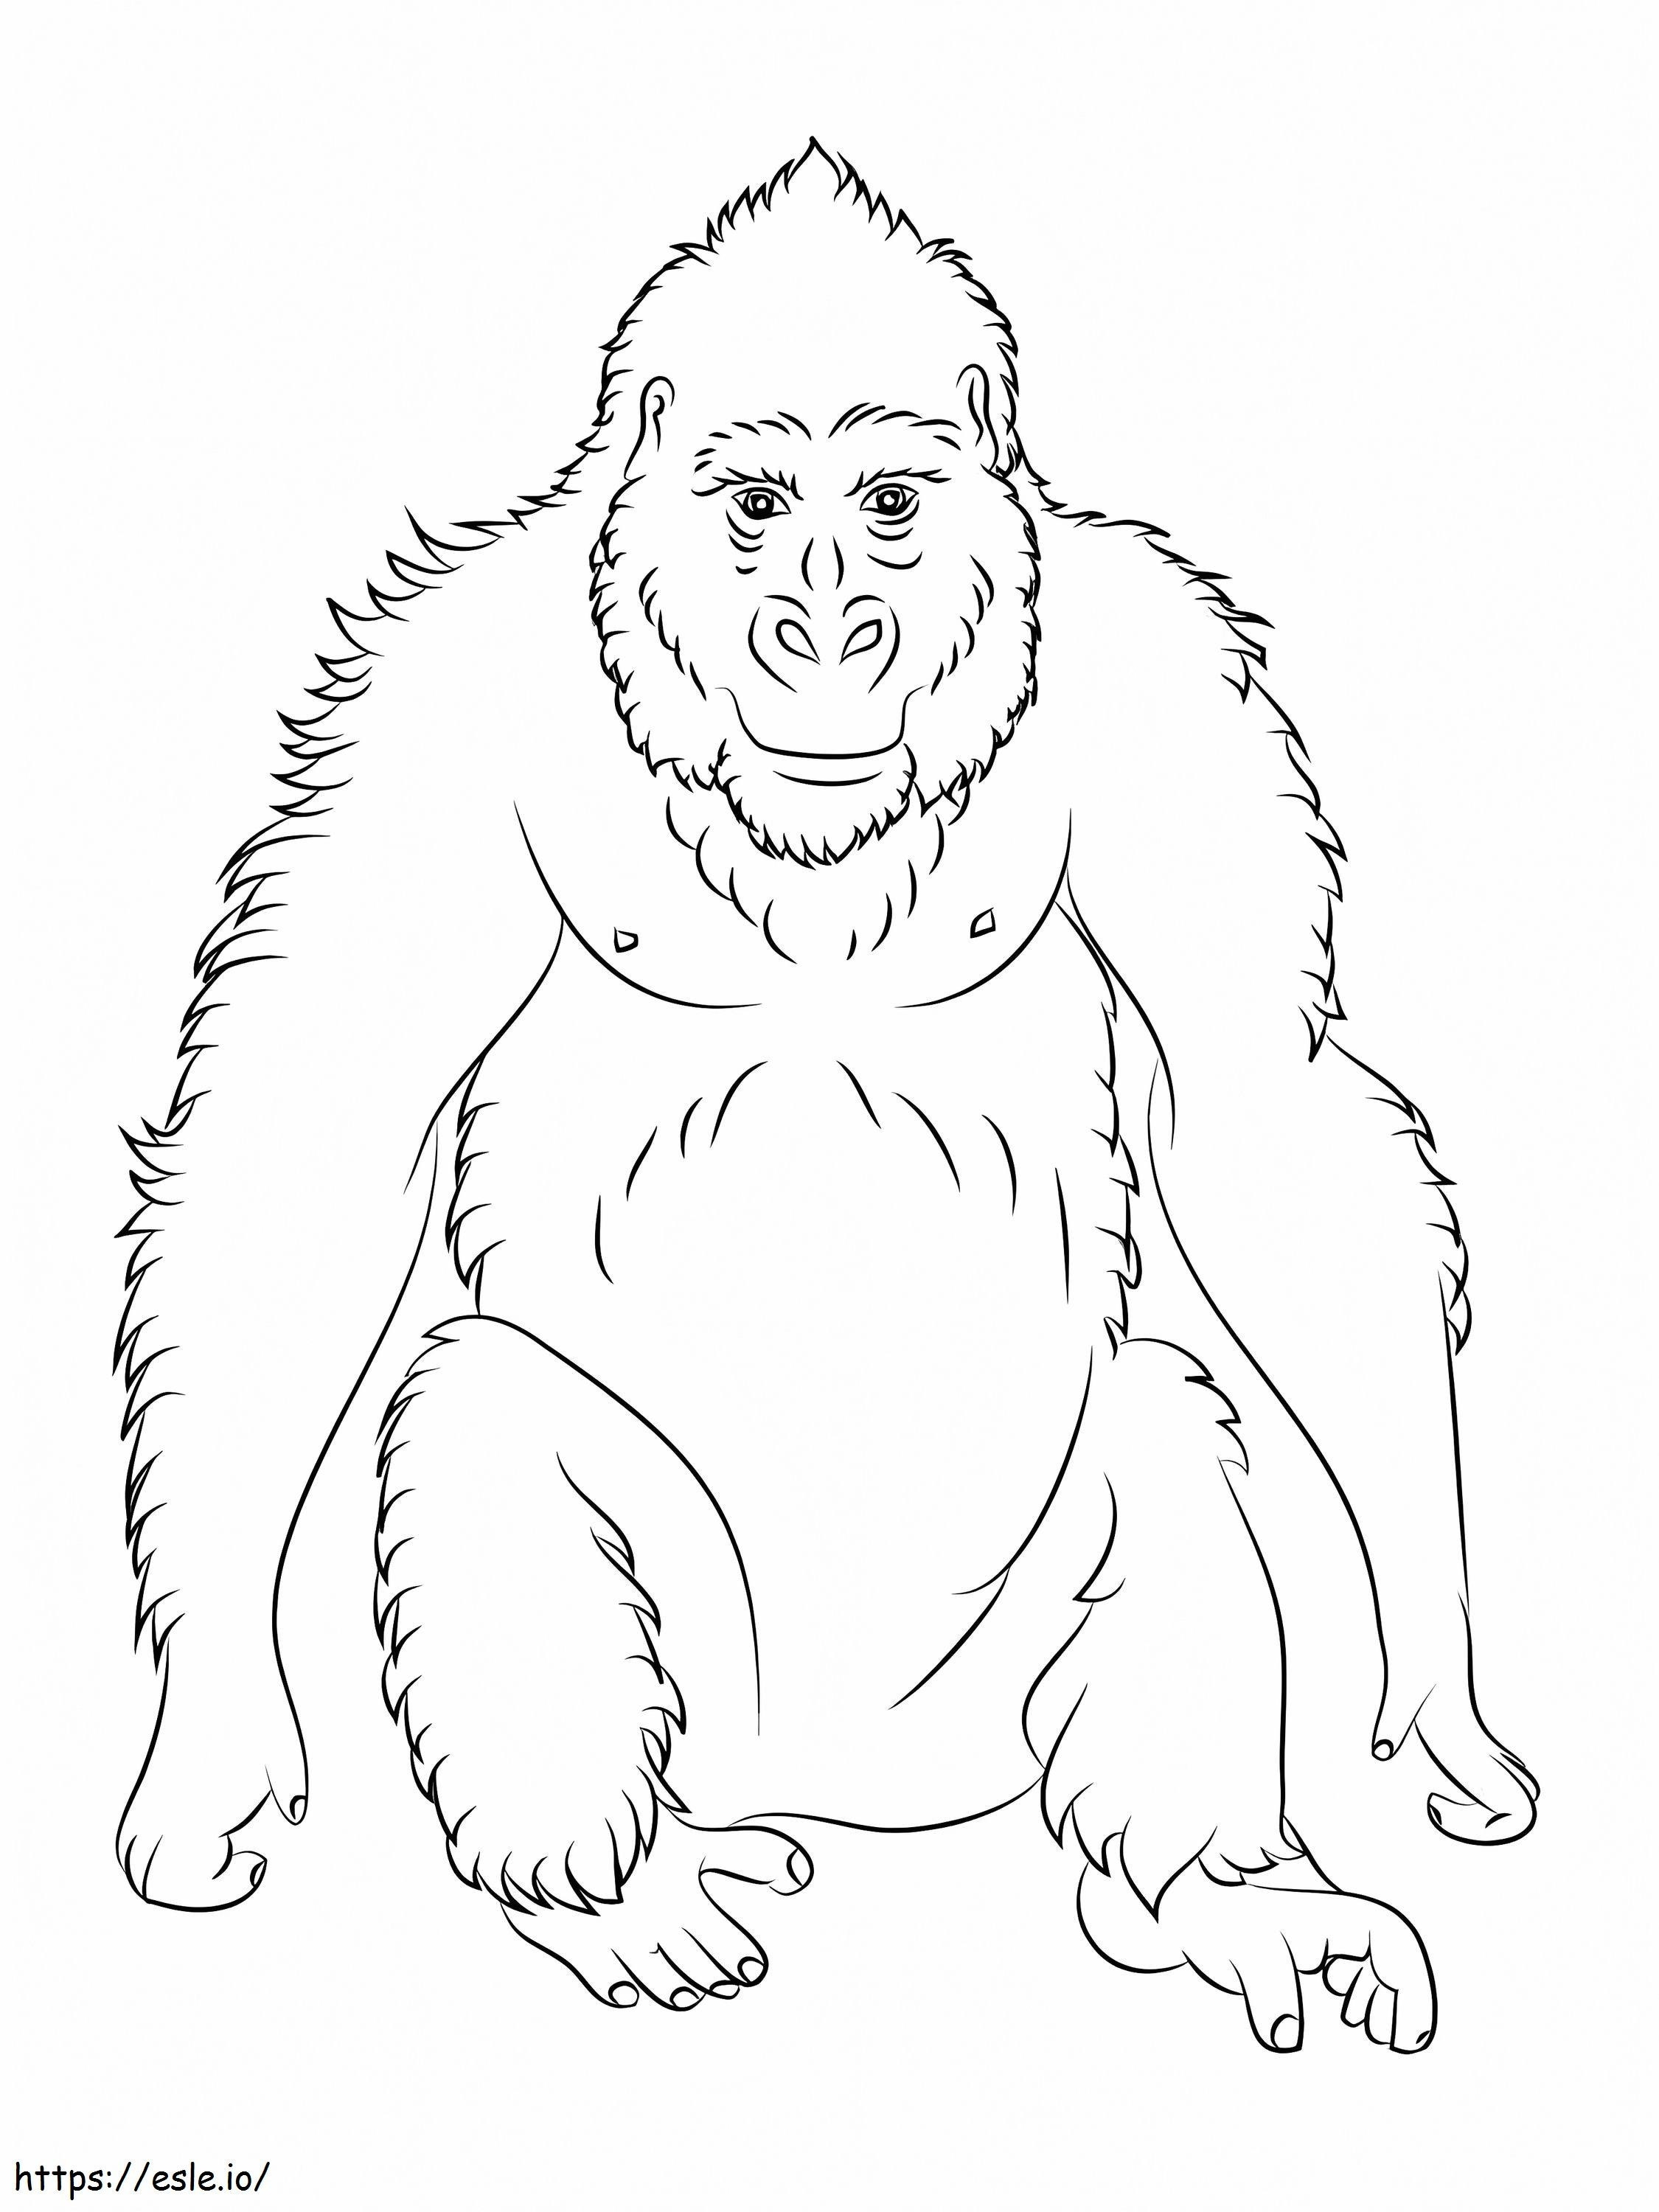 Basic Orangutan coloring page